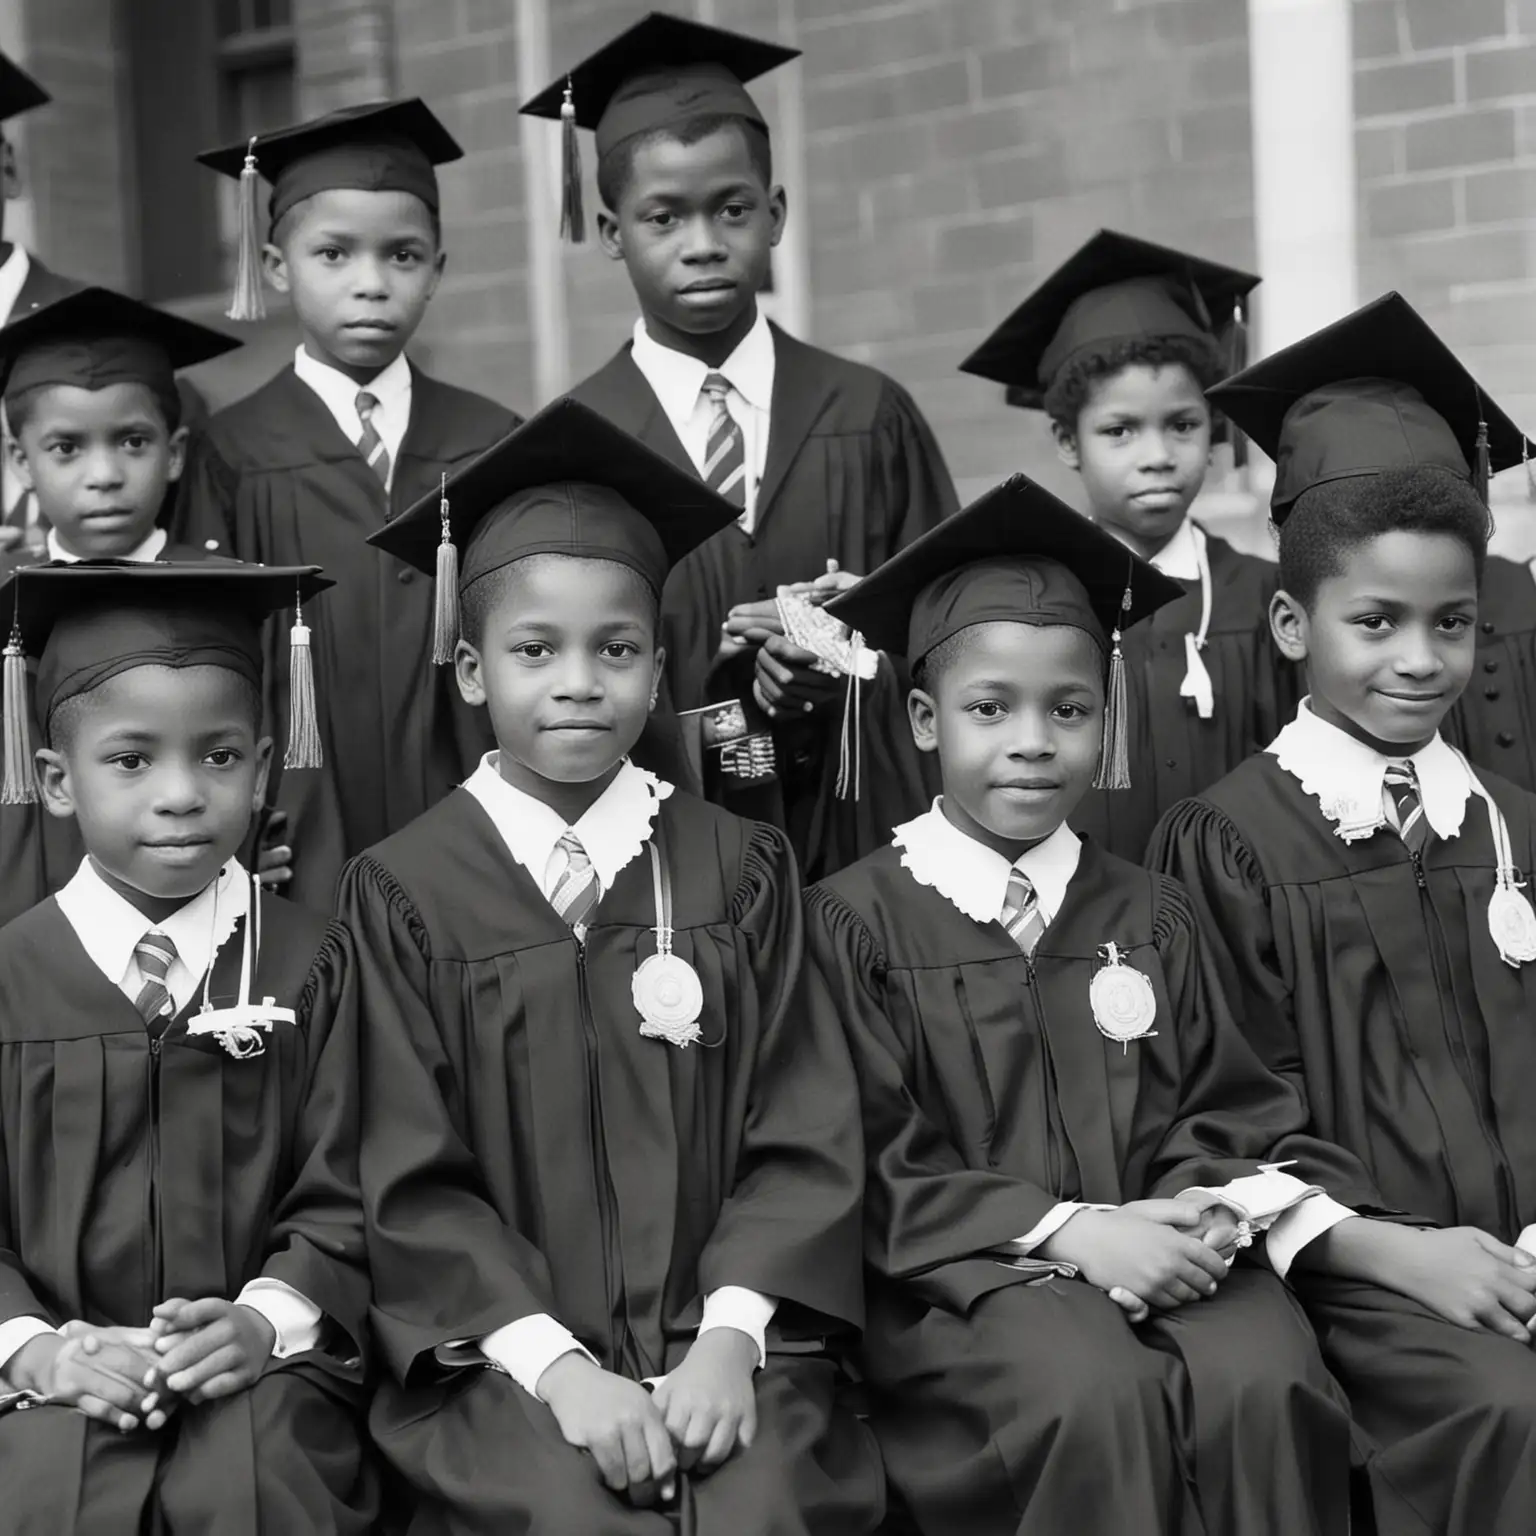 AfricanAmerican Children Celebrating Graduation in 1930s Style